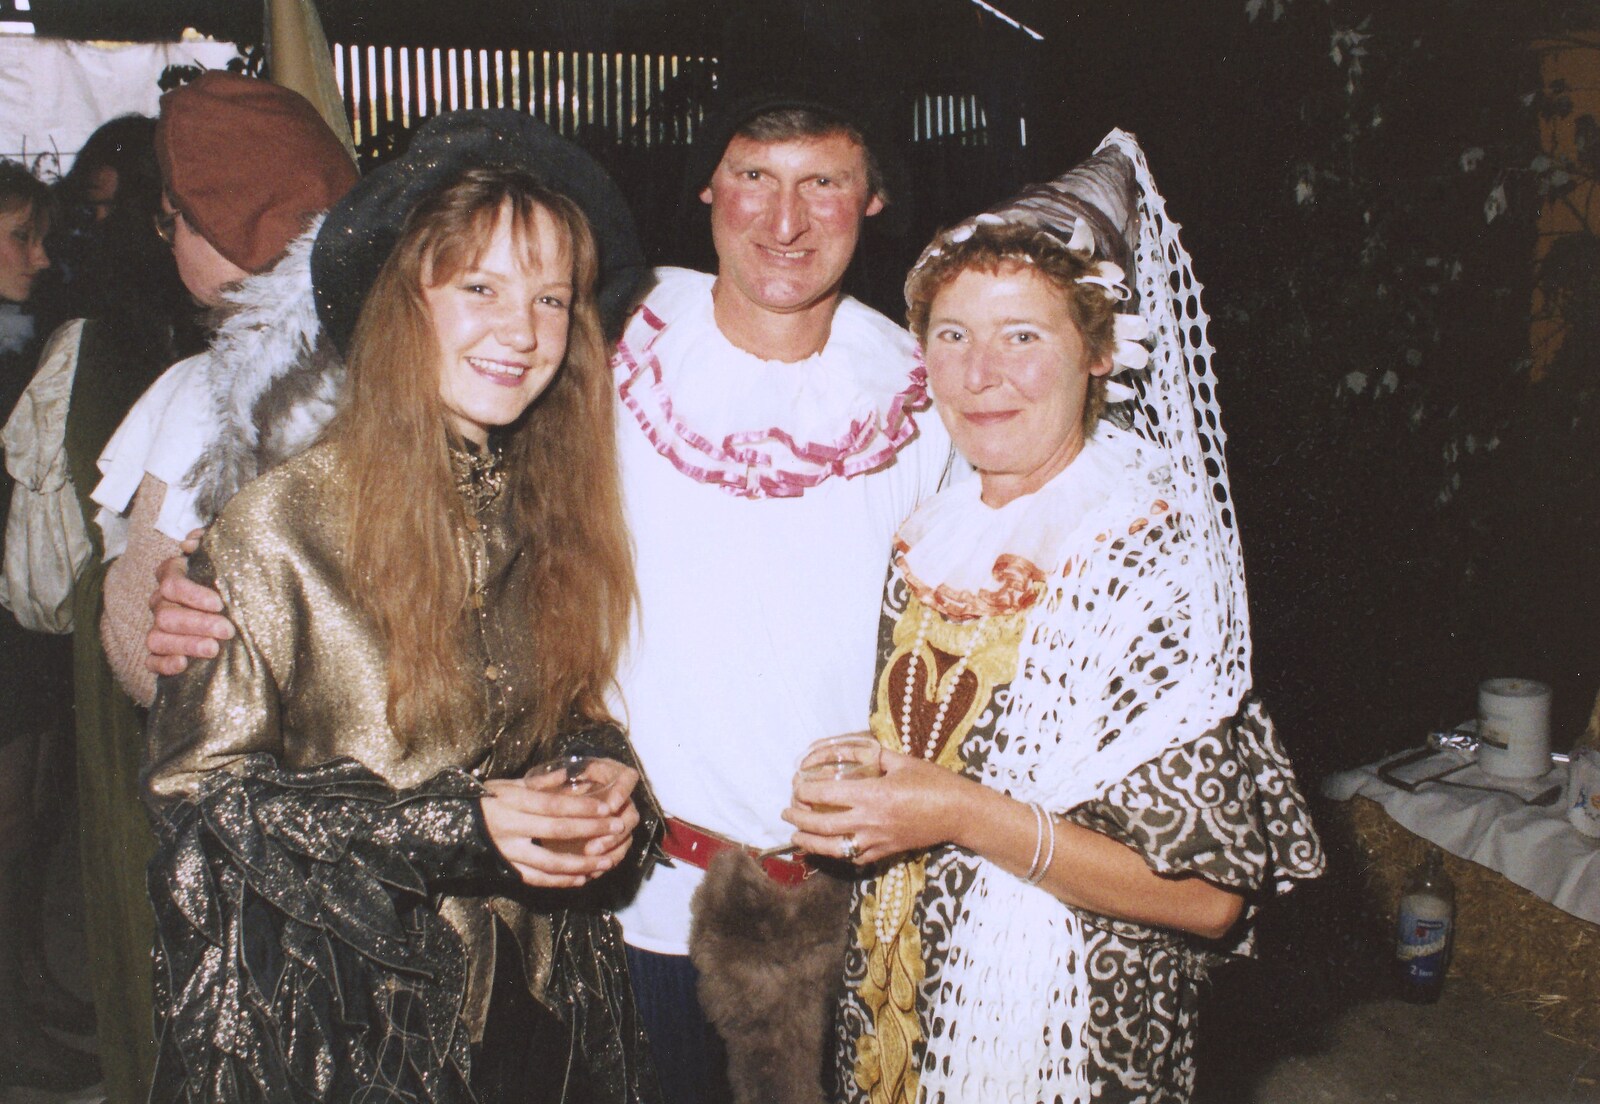 Geoff, Brenda and the birthday girl from A Mediaeval Birthday Party, Starston, Norfolk - 27th July 1990